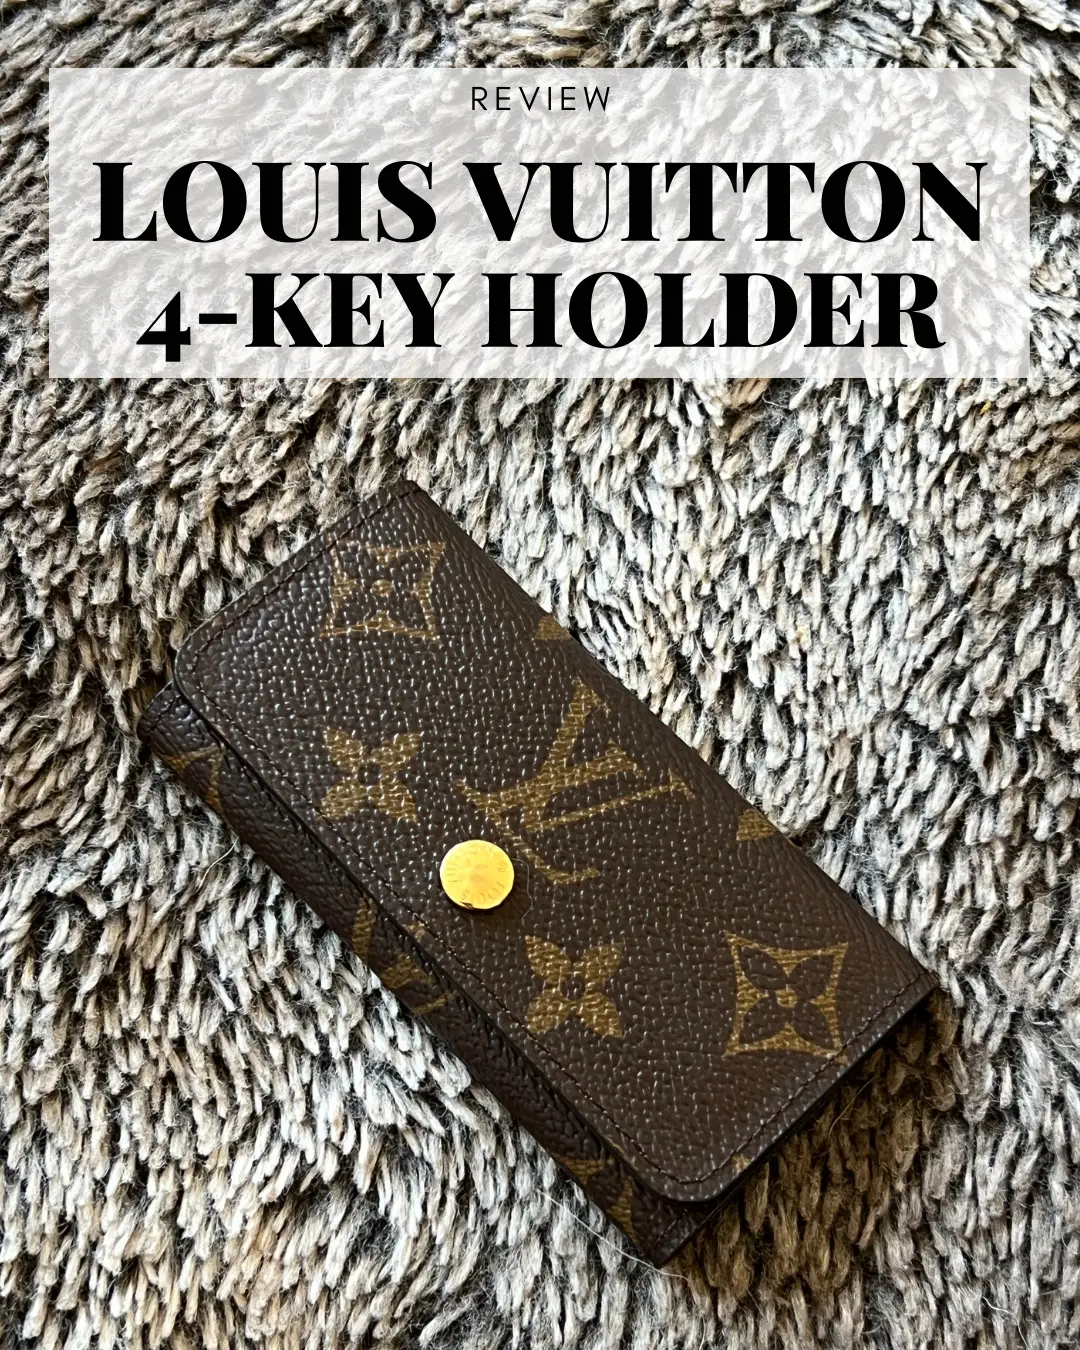 LOUIS VUITTON Monogram 6 Key Holder - More Than You Can Imagine